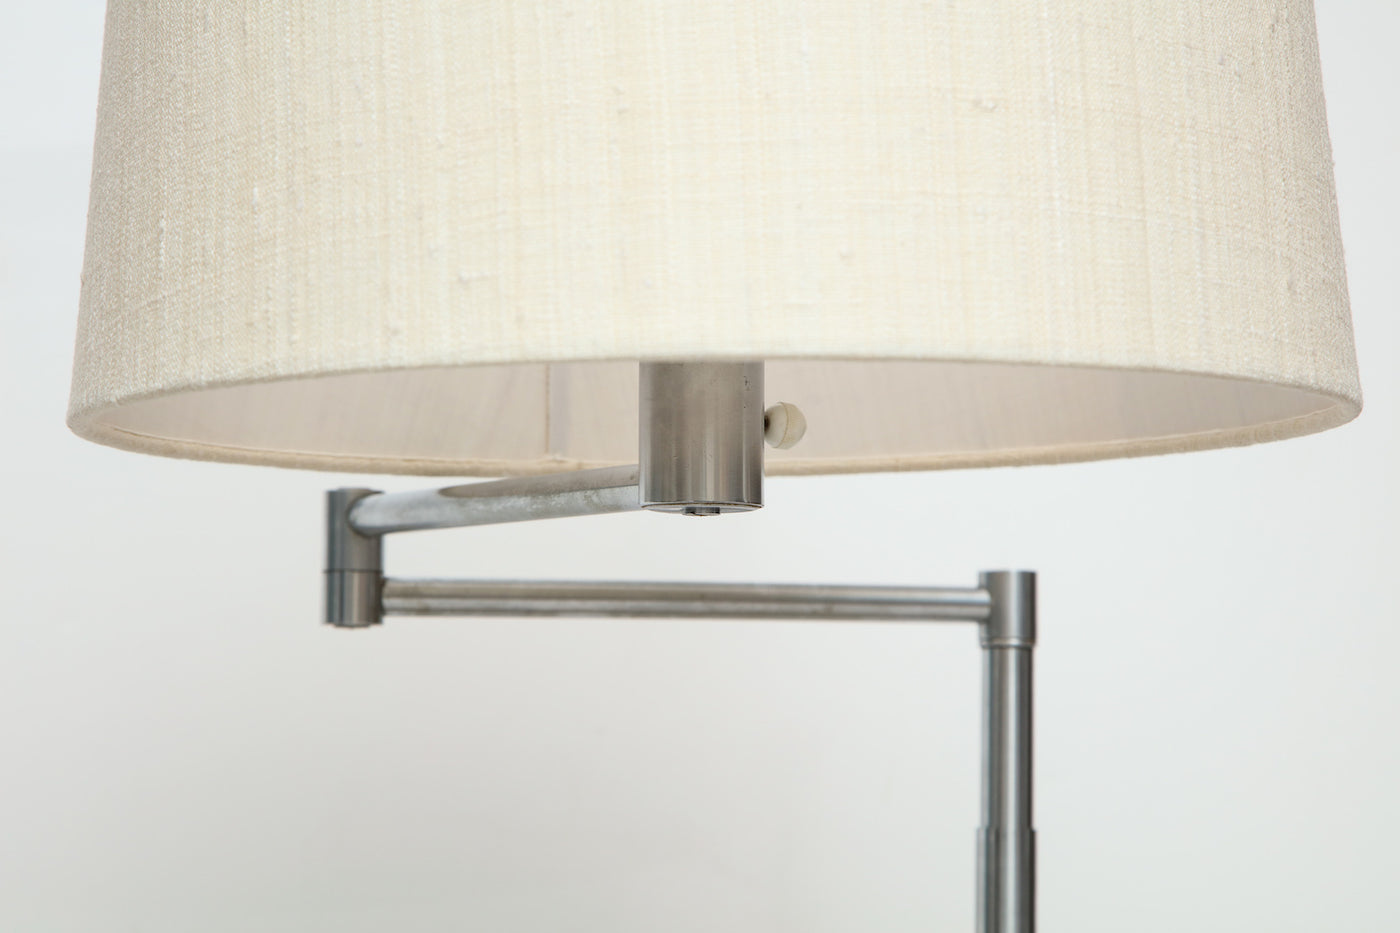 Early Swing-arm Floor Lamp By Nessen Studio